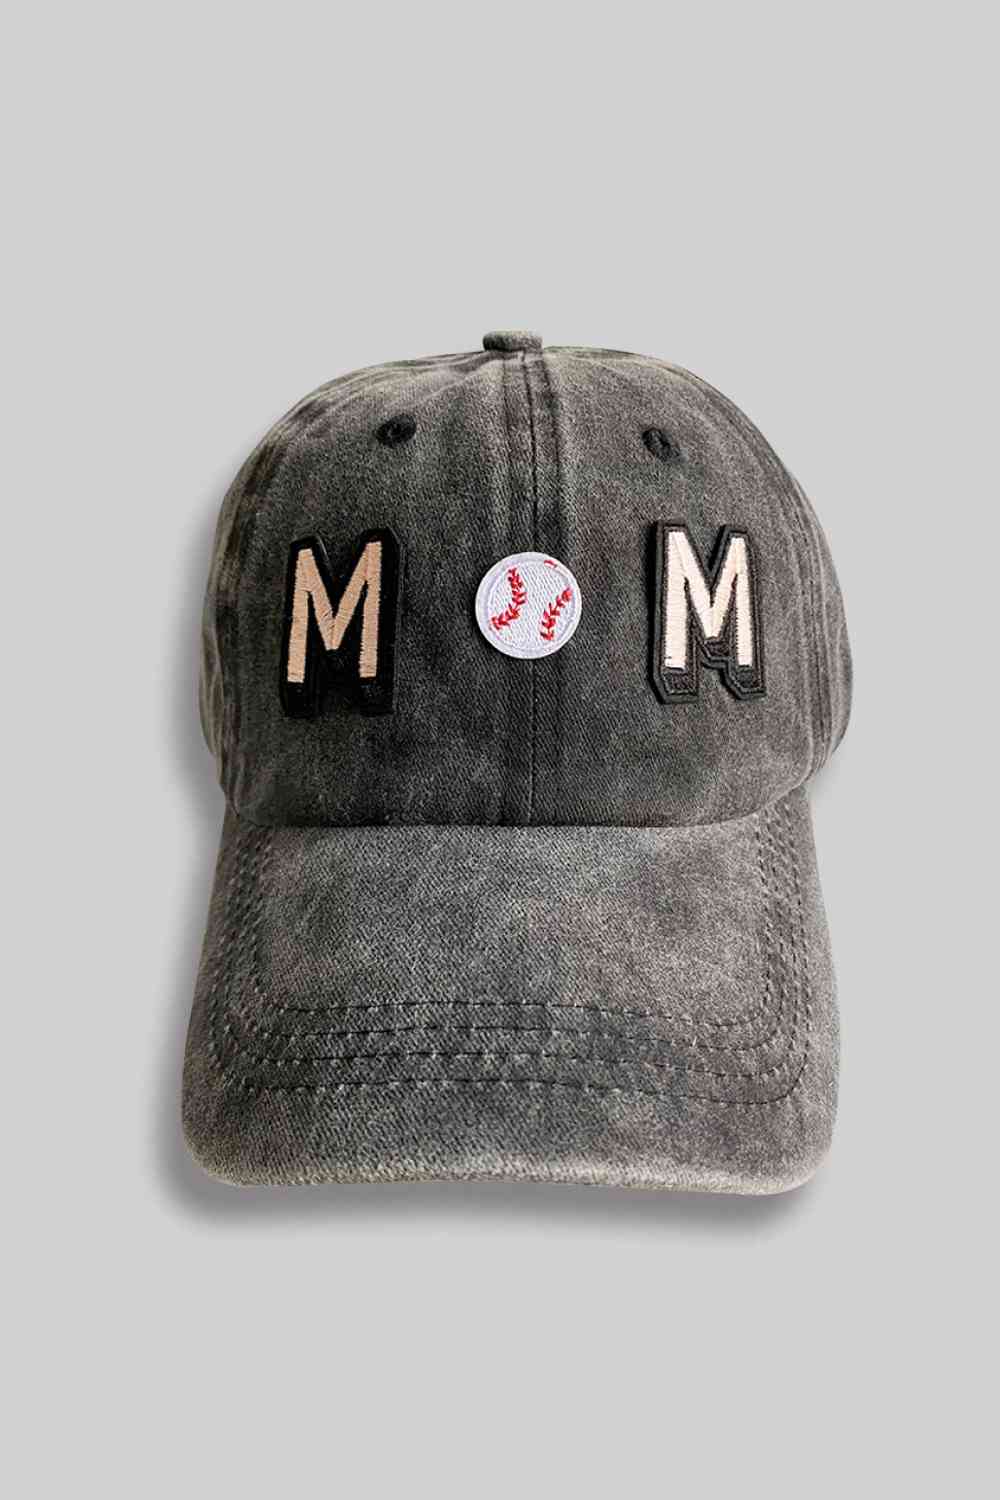 MOM Baseball Cap (Baseball)